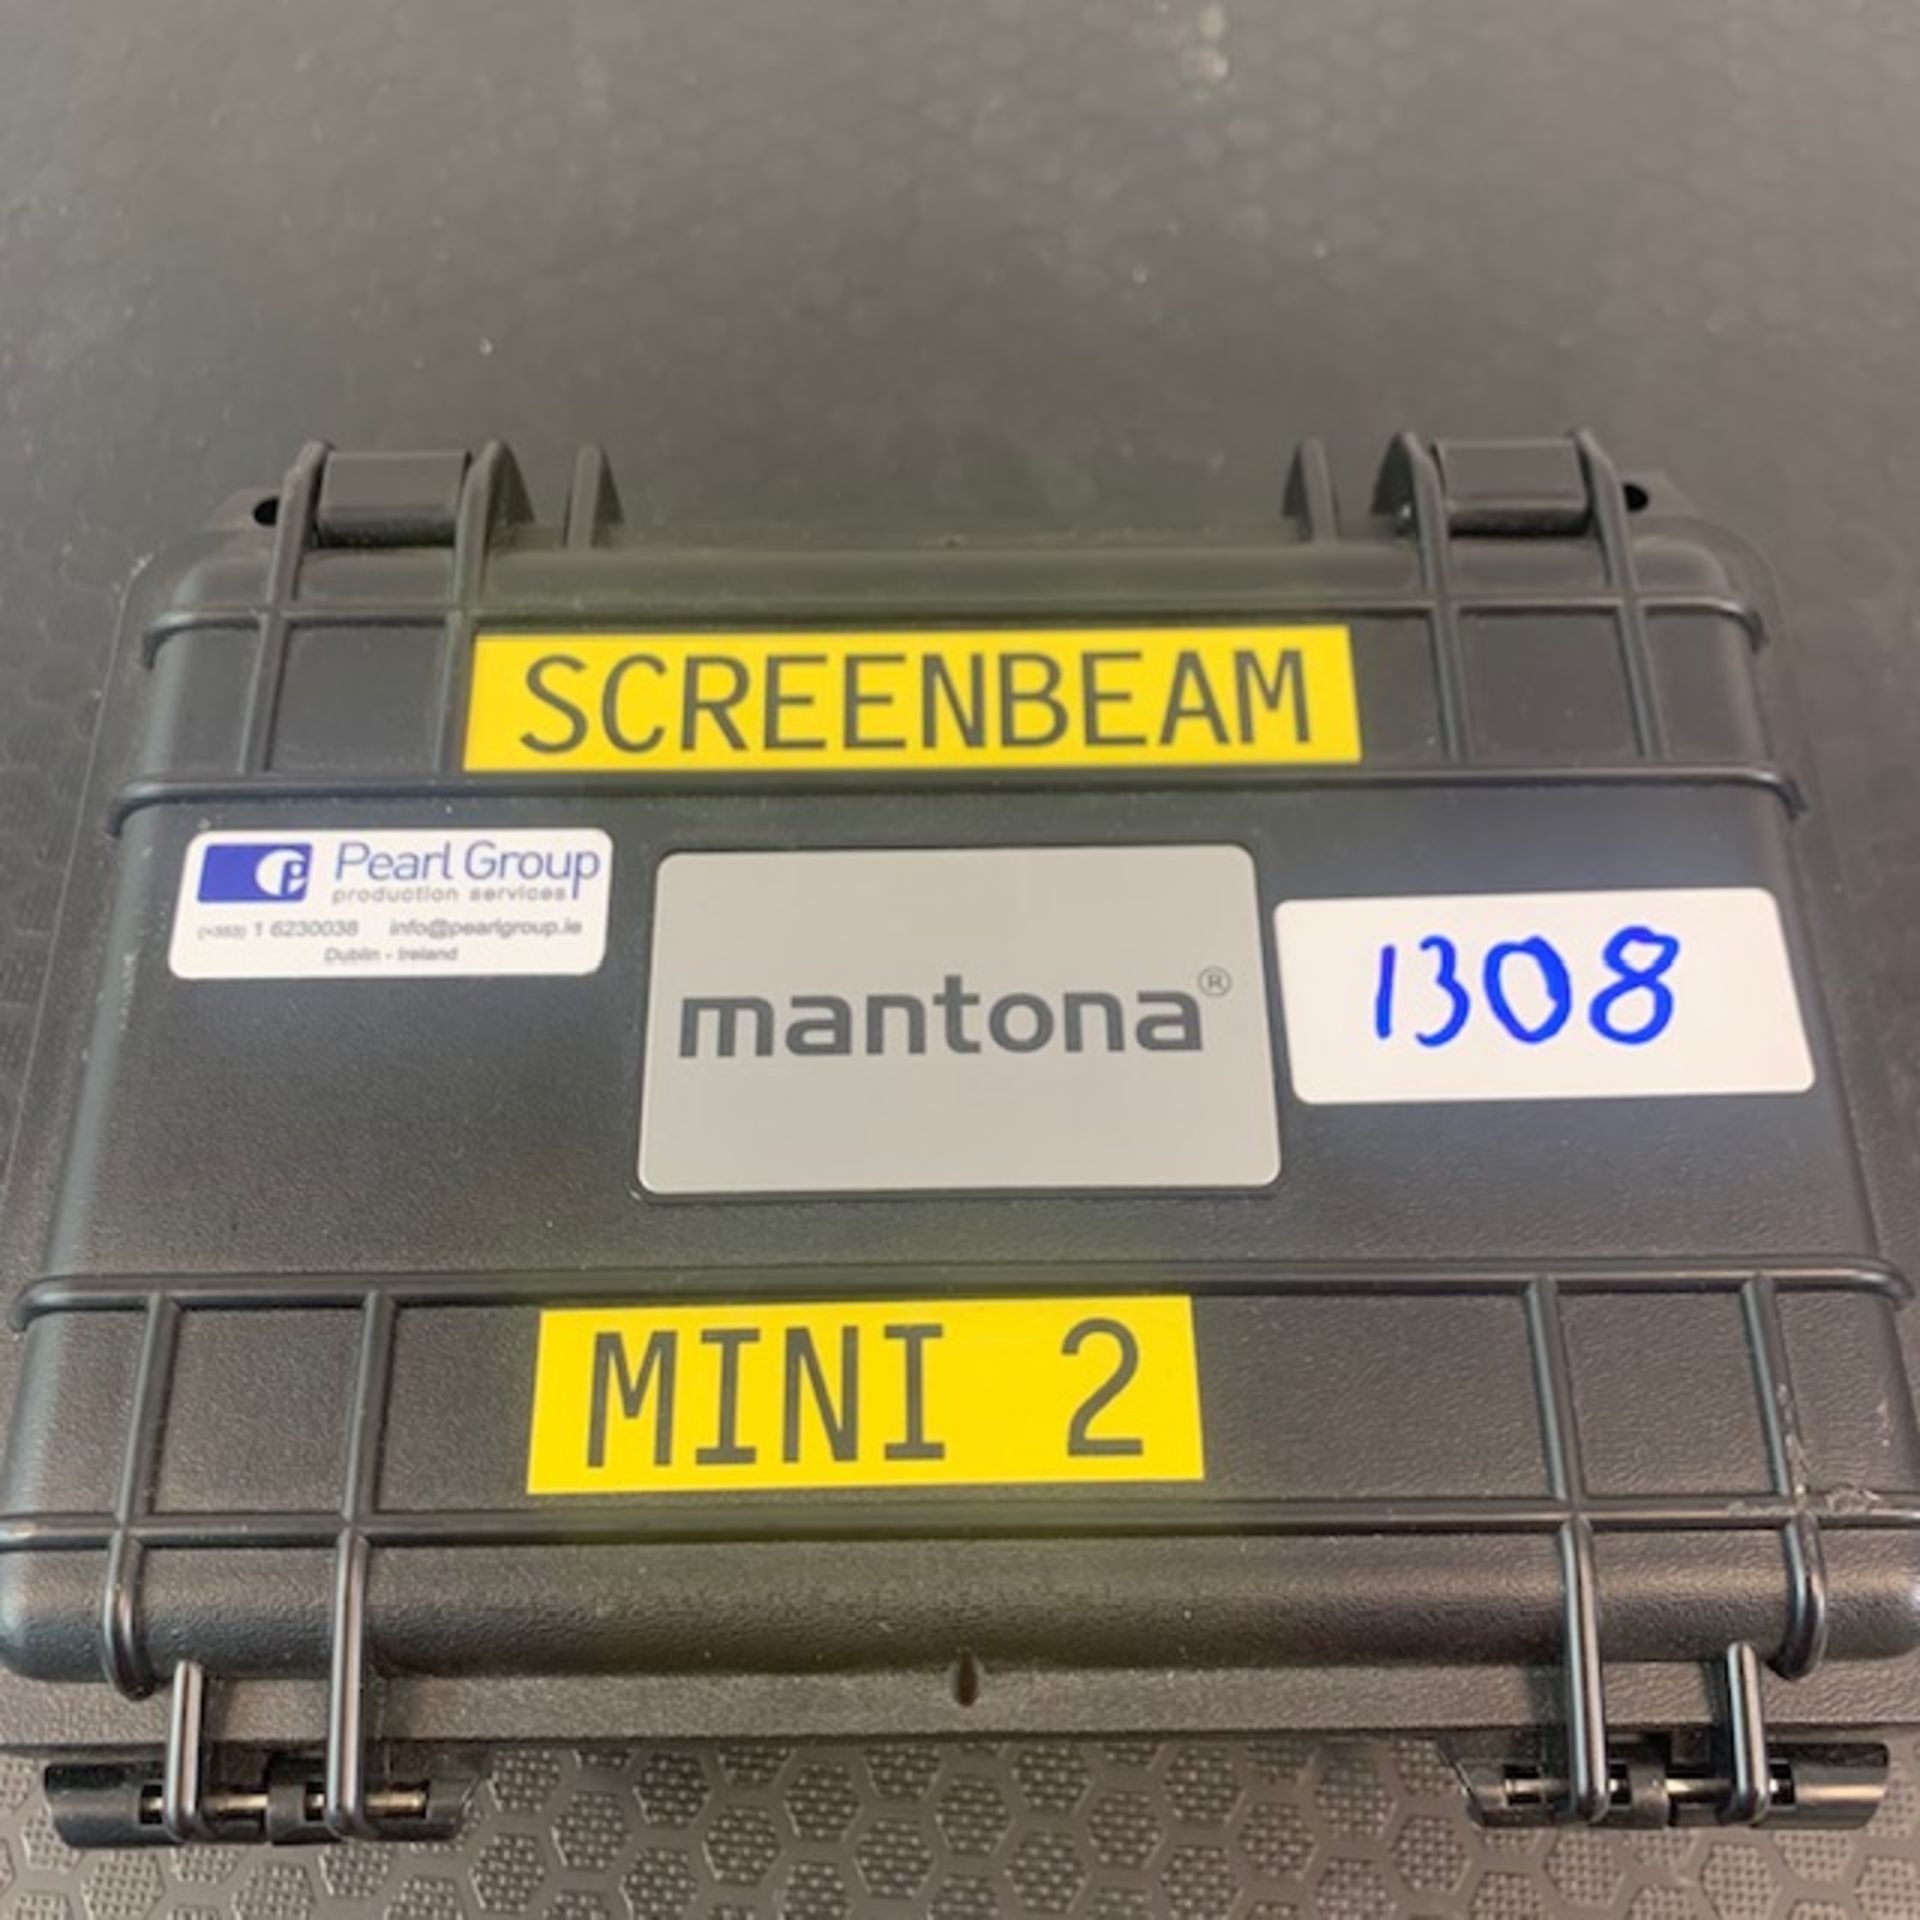 1 X ScreenBeam Mini2 Actiontec Wth PSU In Case - Ref: 1308 - CL581 - Location: Altrincham Wa14 - Image 2 of 2